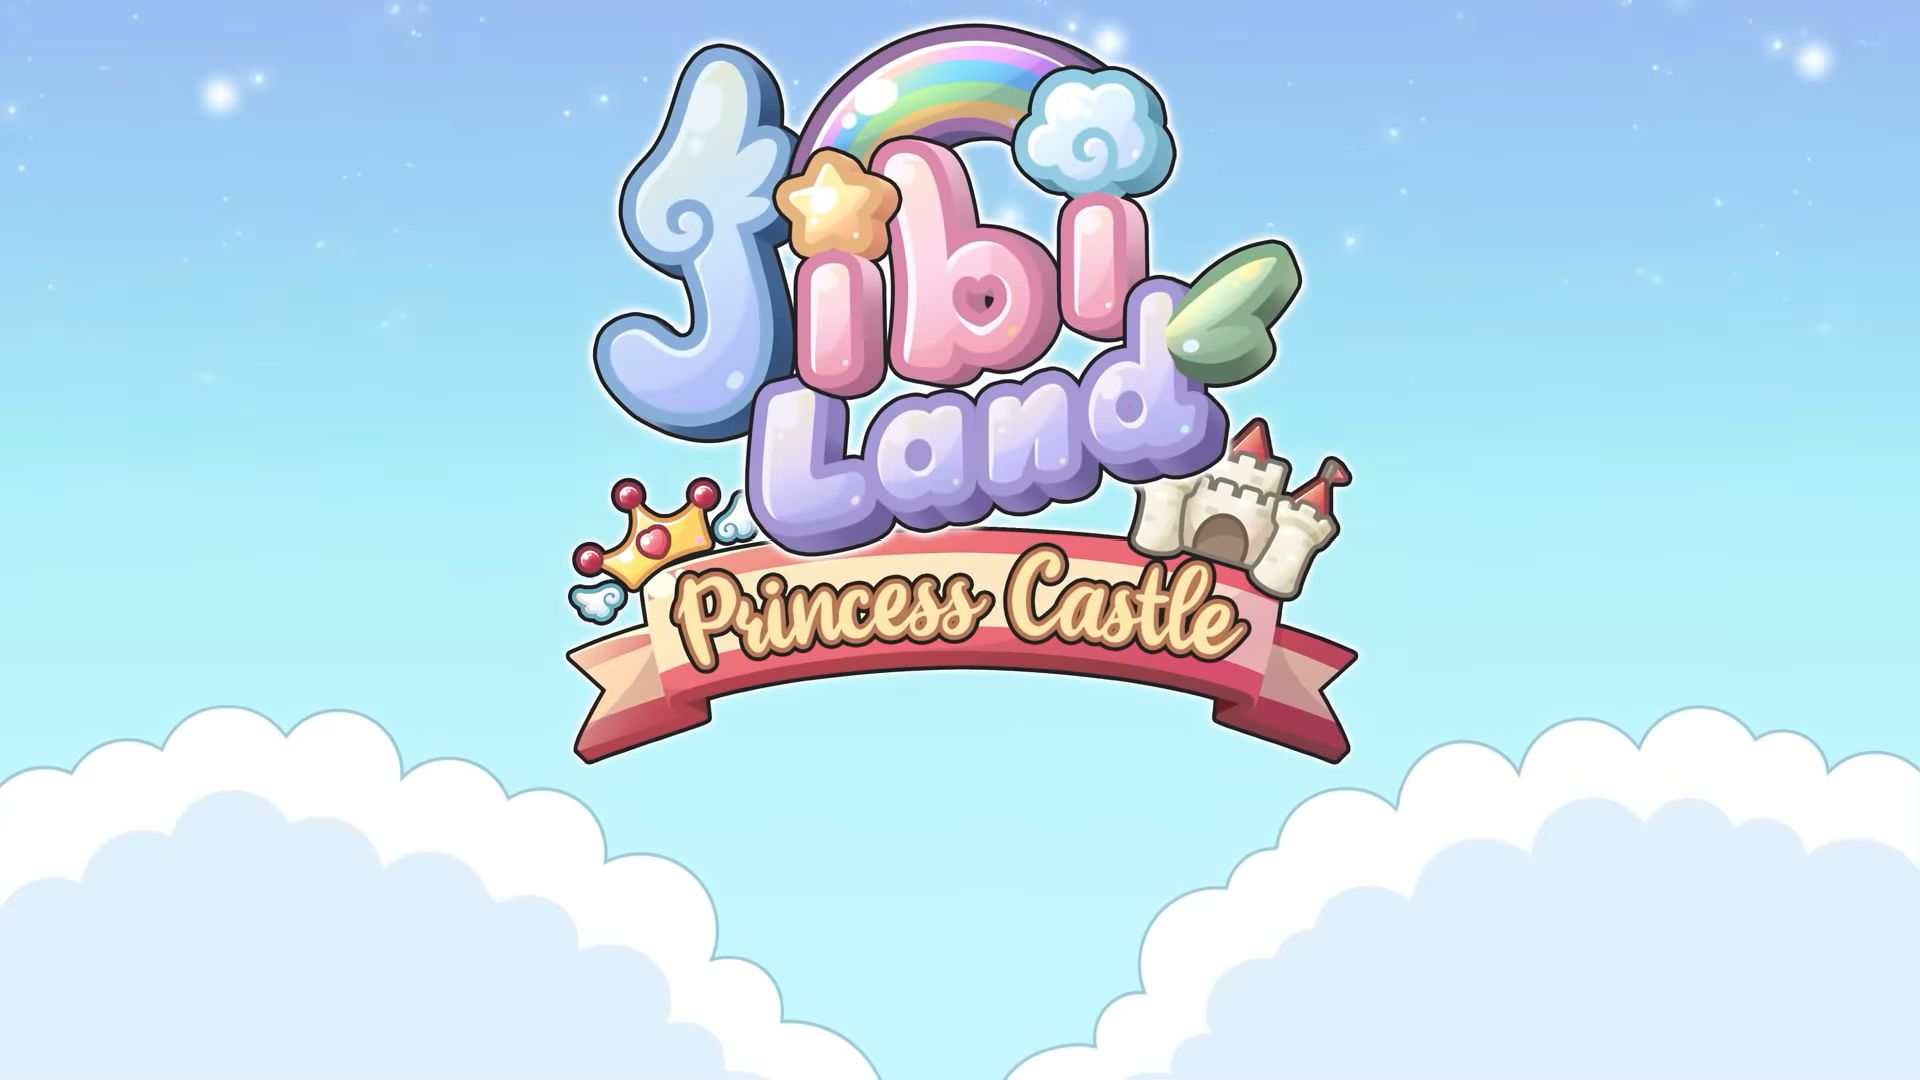 Jibi Land : Princess Castle screenshot 1